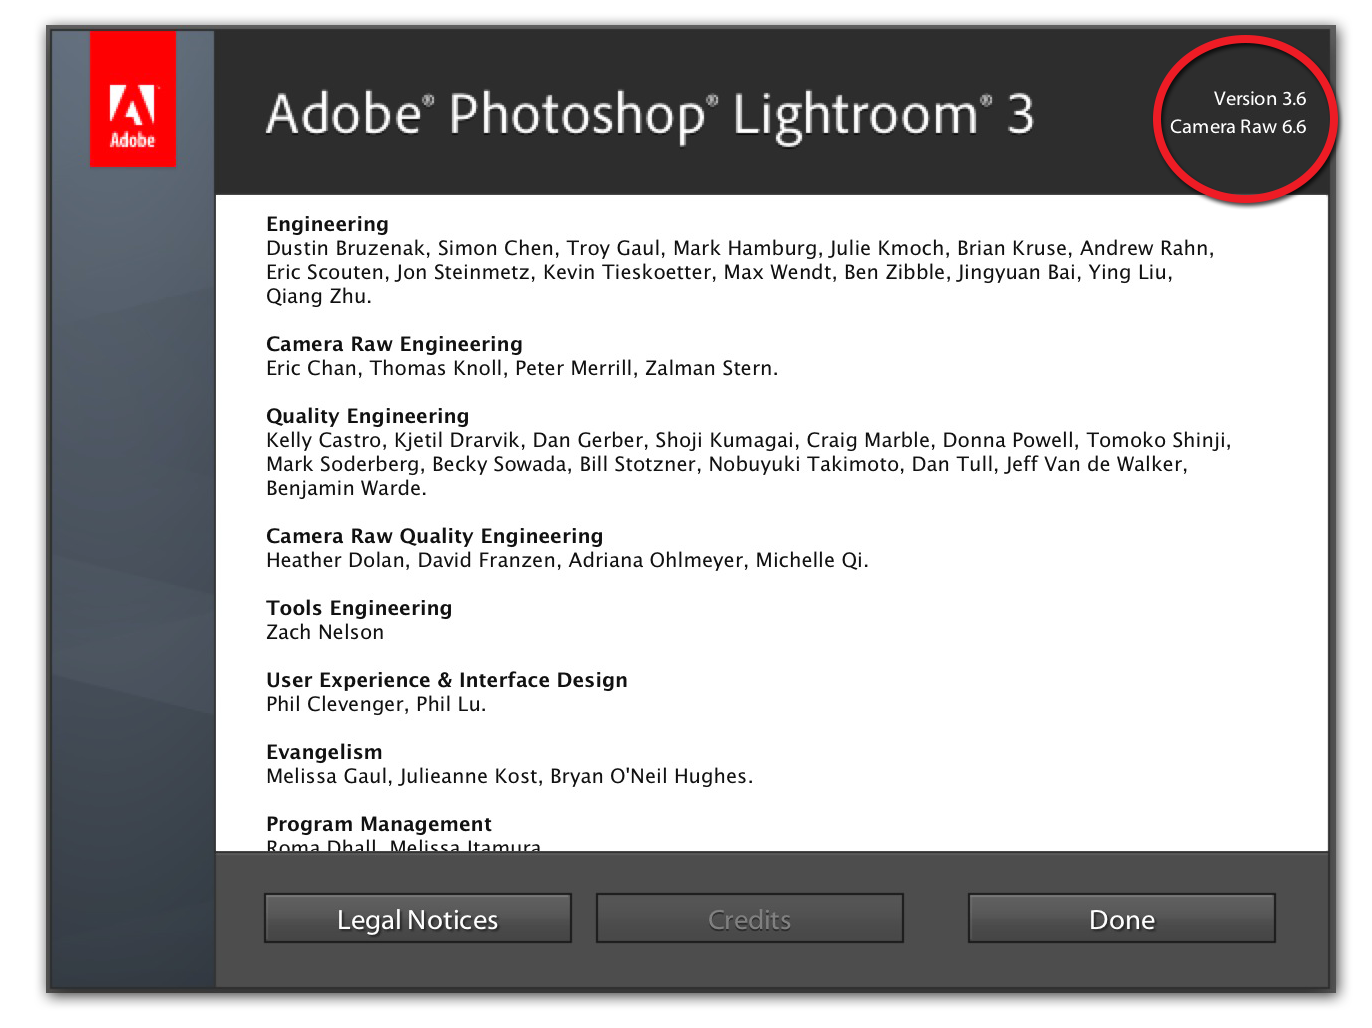 Adobe lightroom 5.3 serial number free download original product key for windows 10 pro